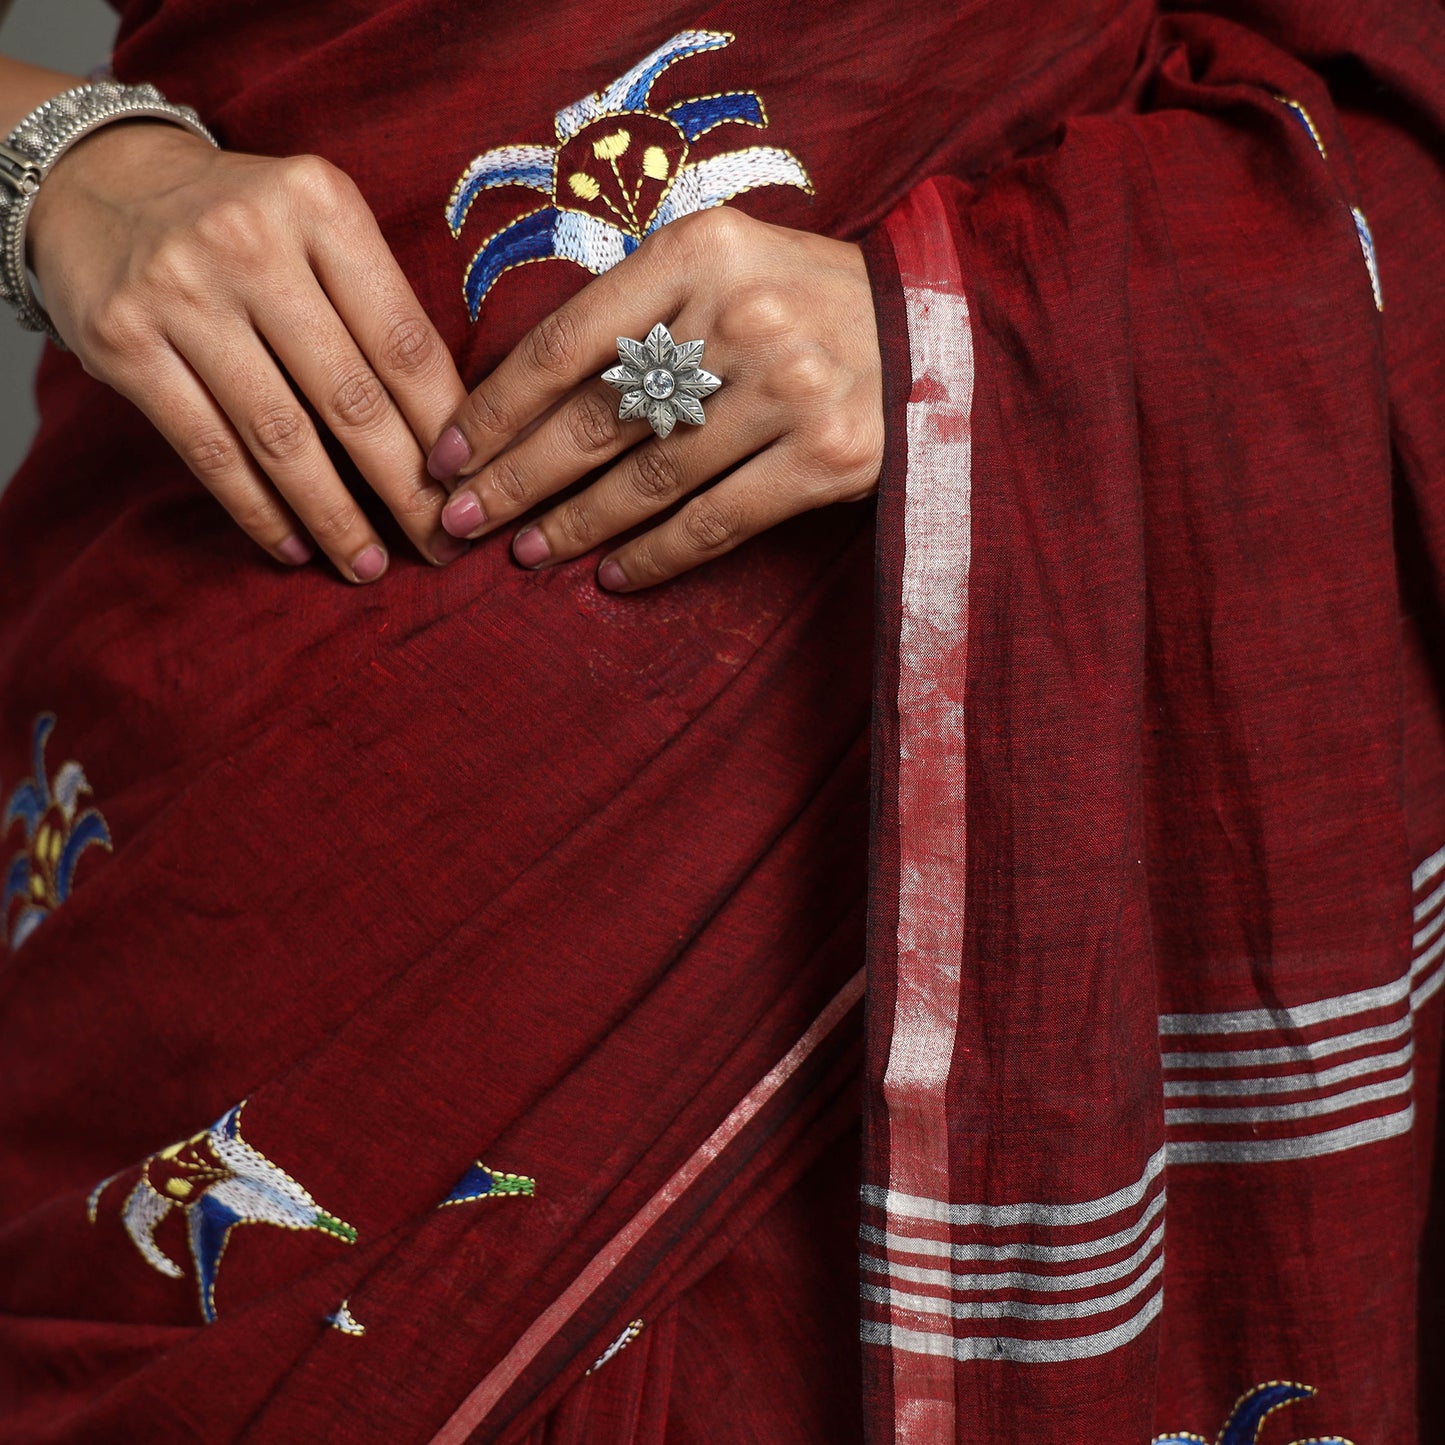 Maroon - Bengal Kantha Embroidery Handloom Cotton Saree